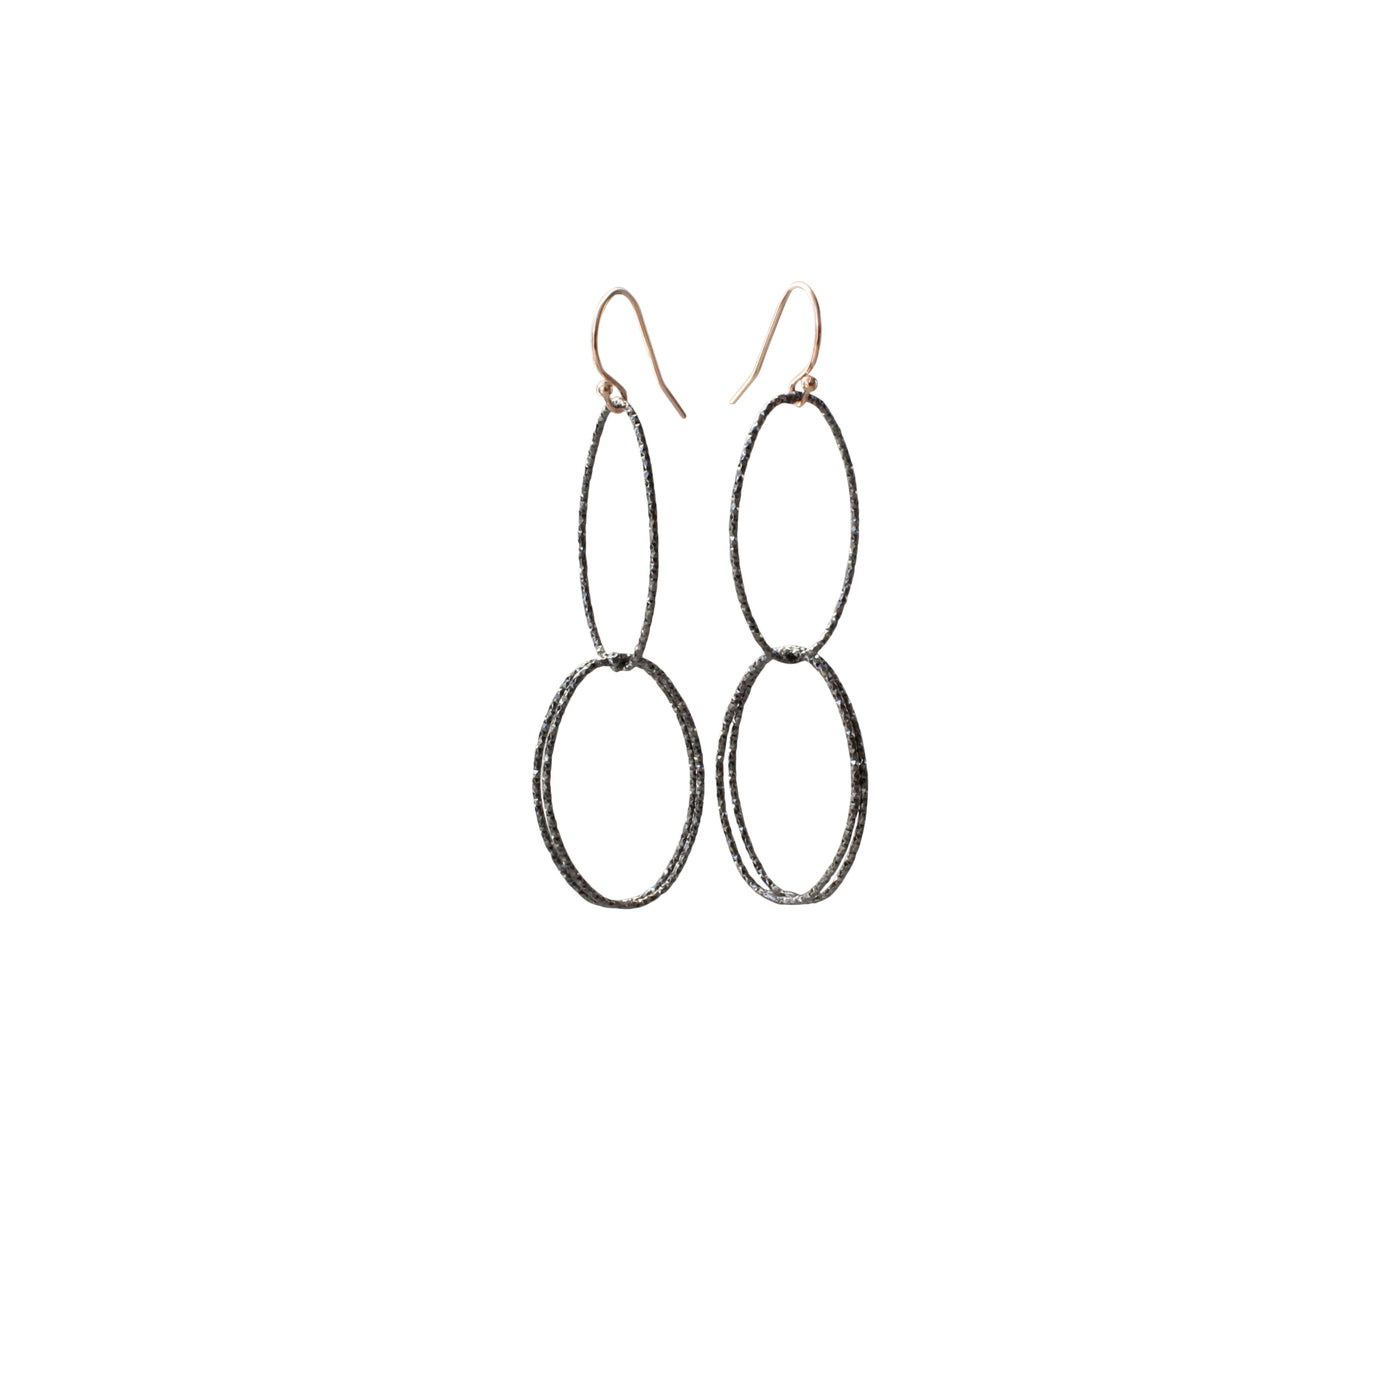 Long Link Earrings | Double Hoop Earrings | Rebecca Scott Jewelry | Black | Oxidized Silver | Special Occasion Jewelry | Statement Jewelry | Simple minimal jewelry | simple long hoops 